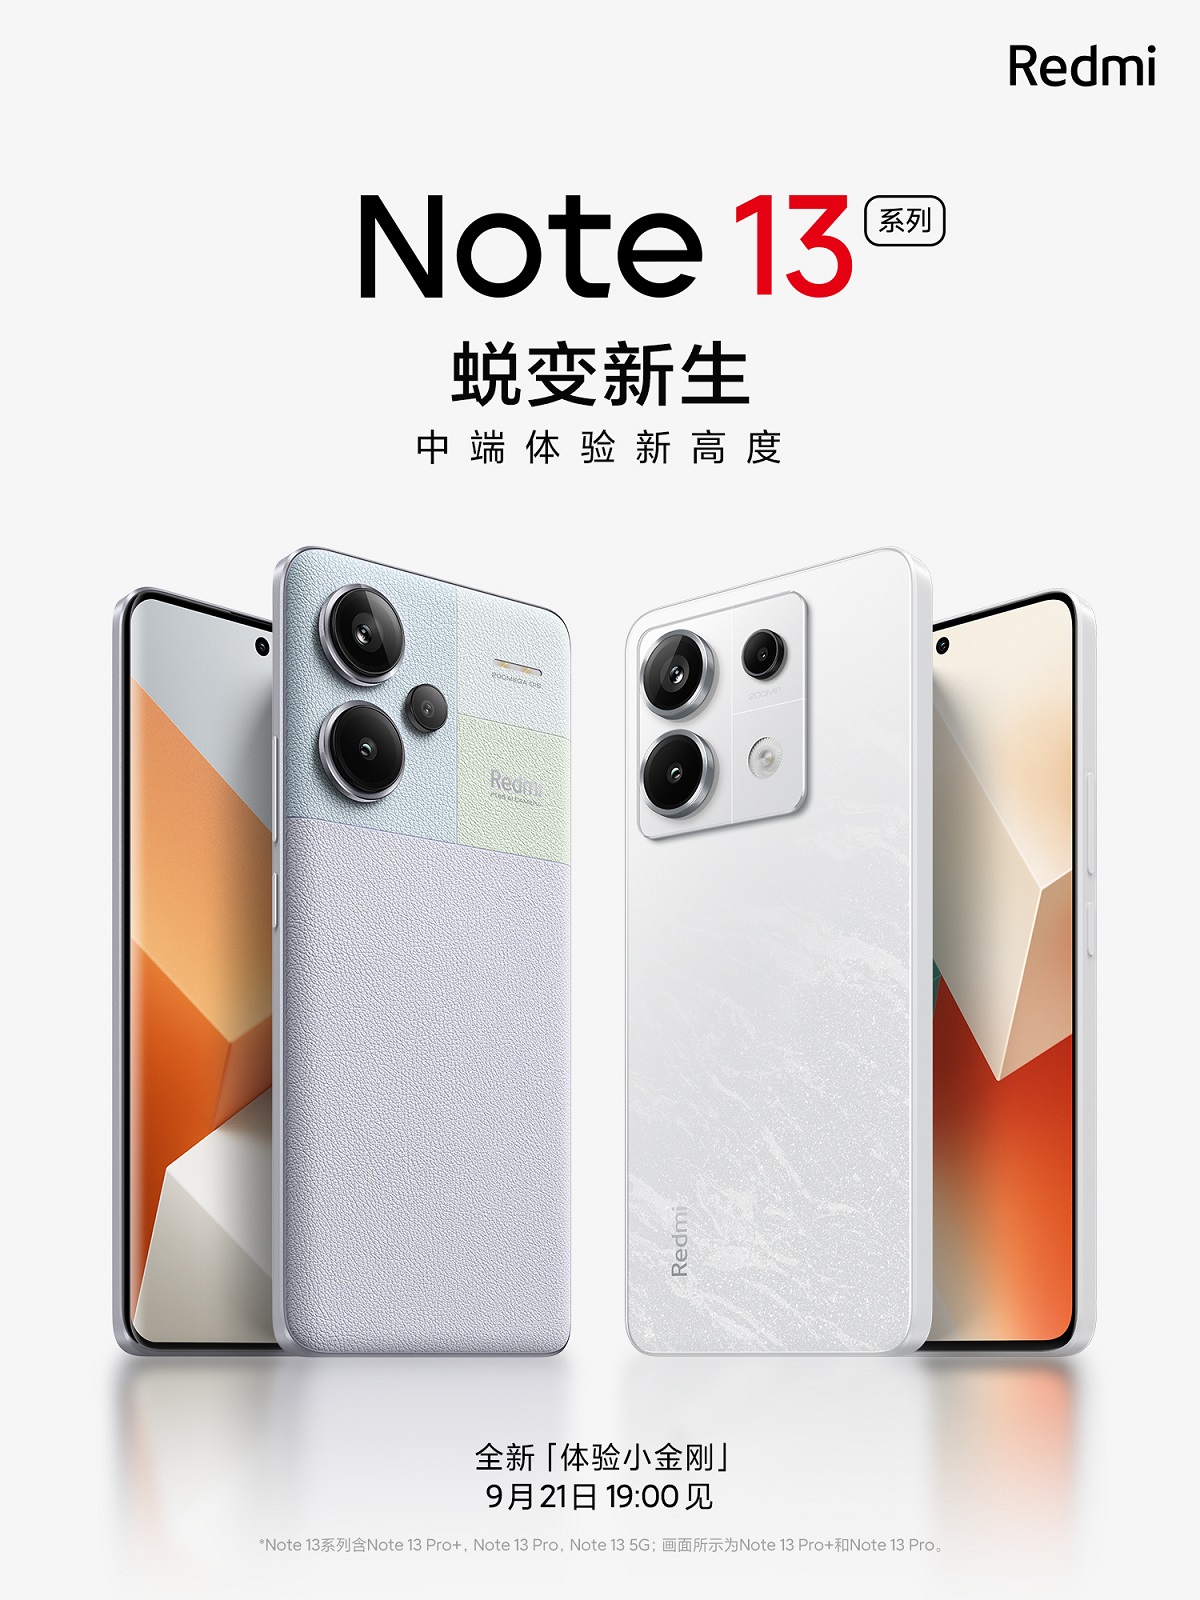 Redmi Note 13 Pro+ и Note 13 Pro